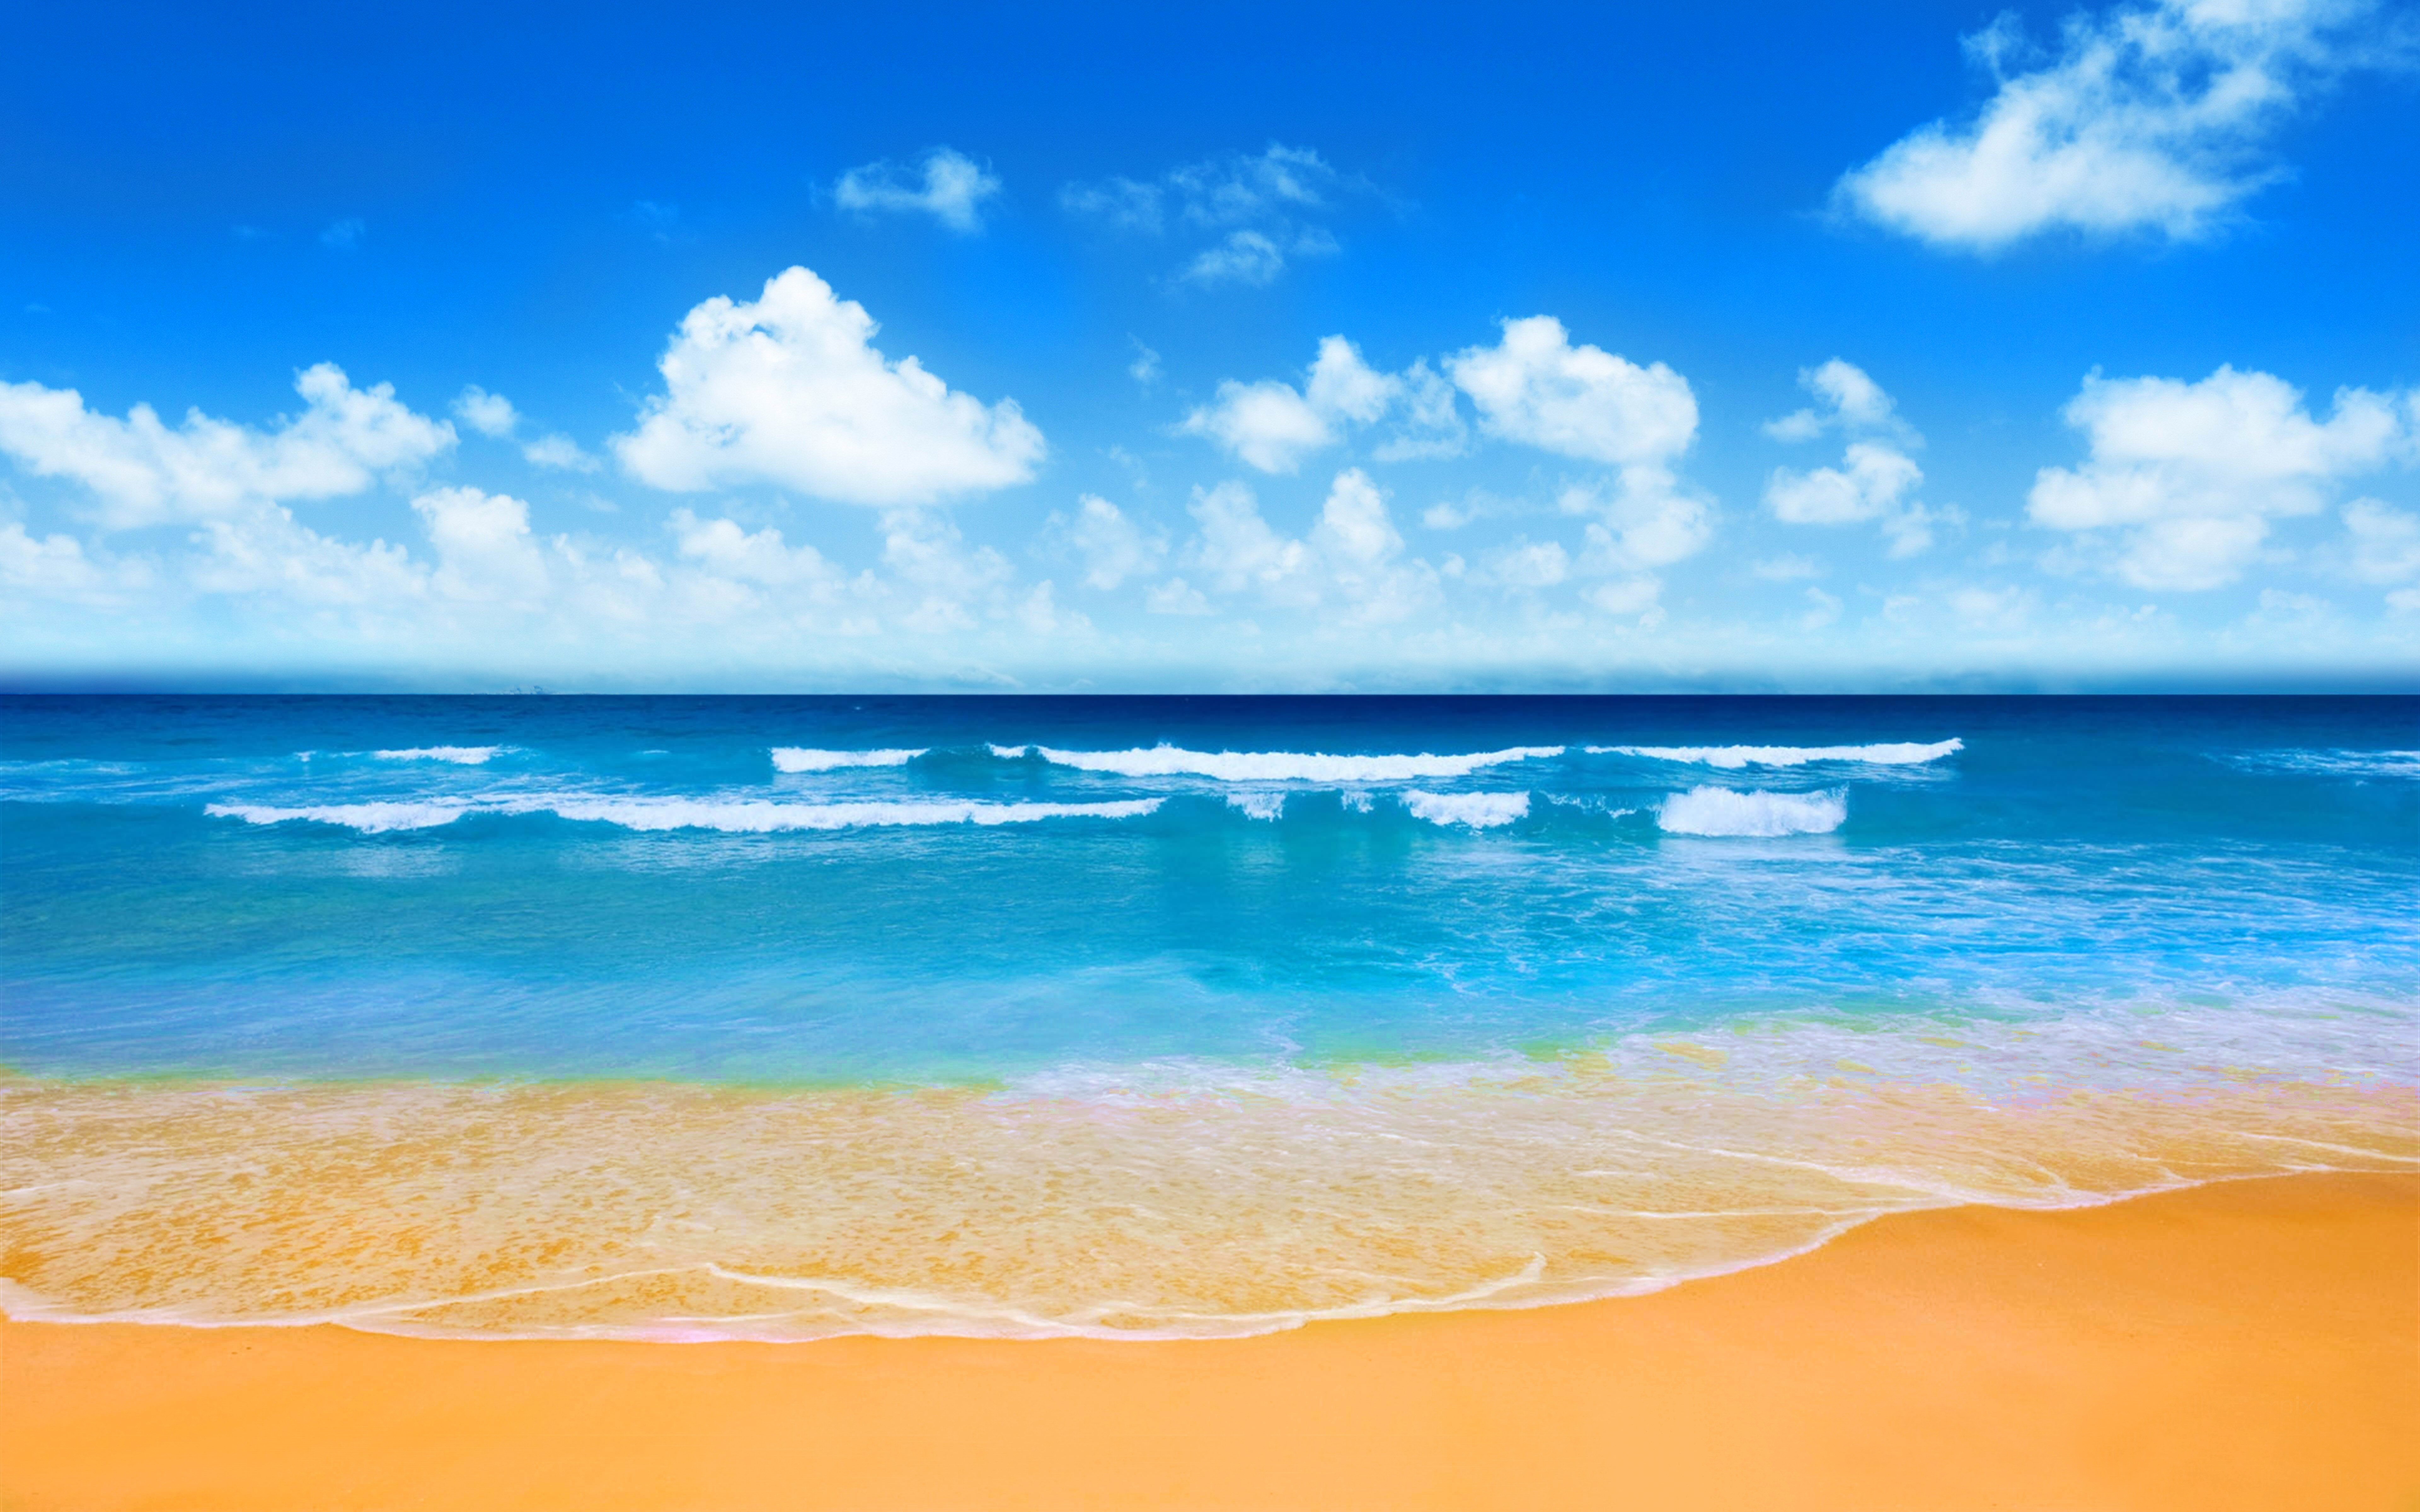 Beach Images Free Download PixelsTalkNet